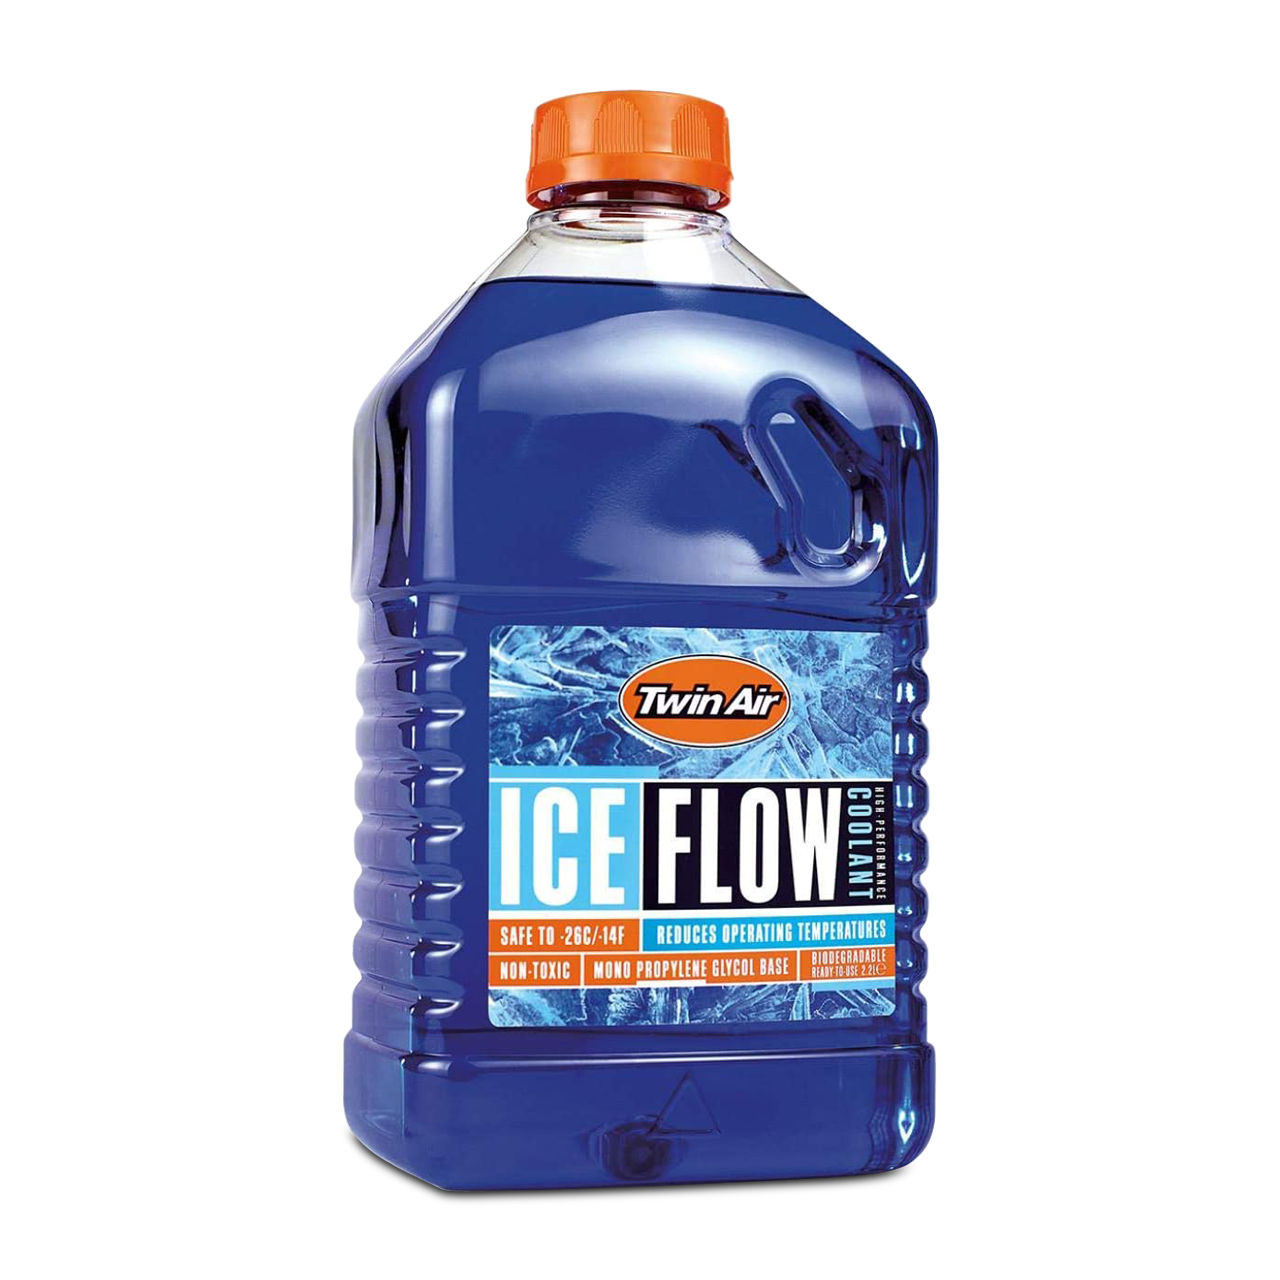 Kühlmittel Twin Air IceFlow 2L - Jetzt 4% Ersparnis